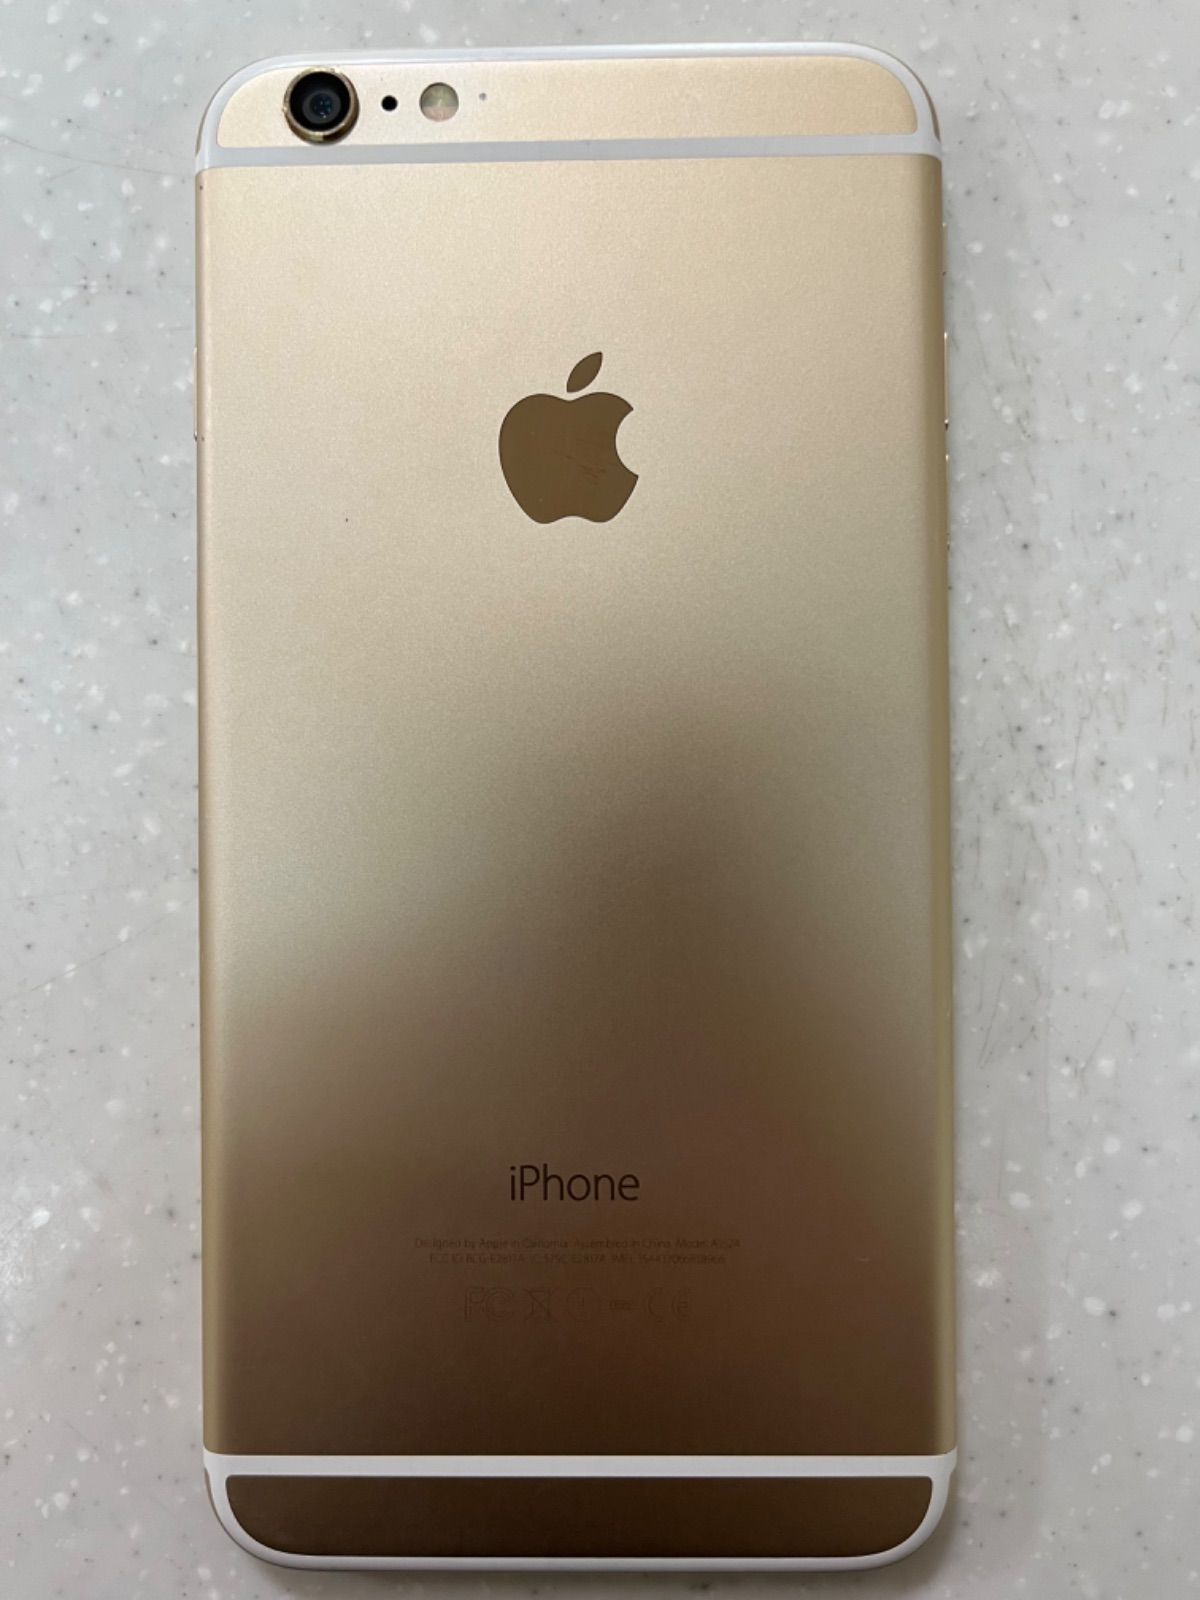 iPhone6 ゴールド 16G ソフトバンク 本体 新品即決 - スマートフォン本体